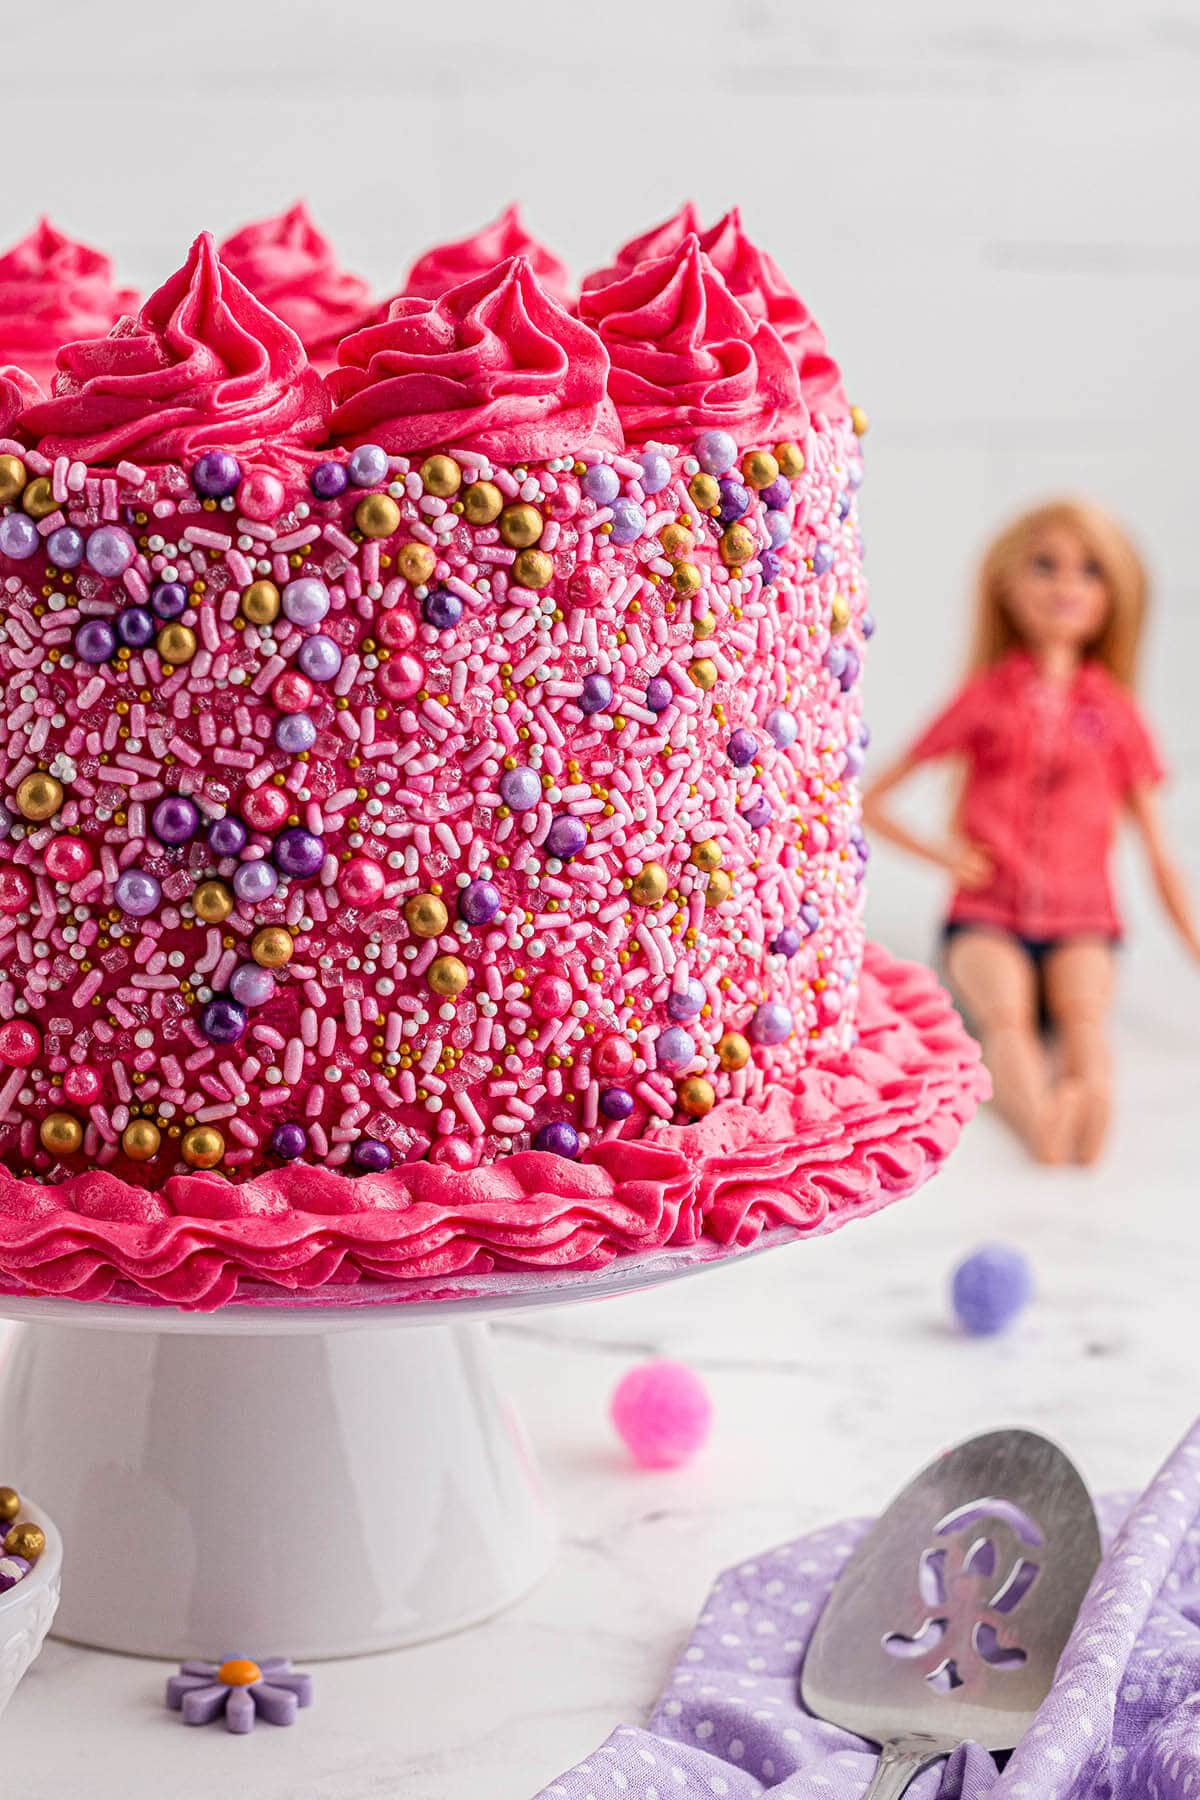 Pink funfetti layer cake with a cake knife.